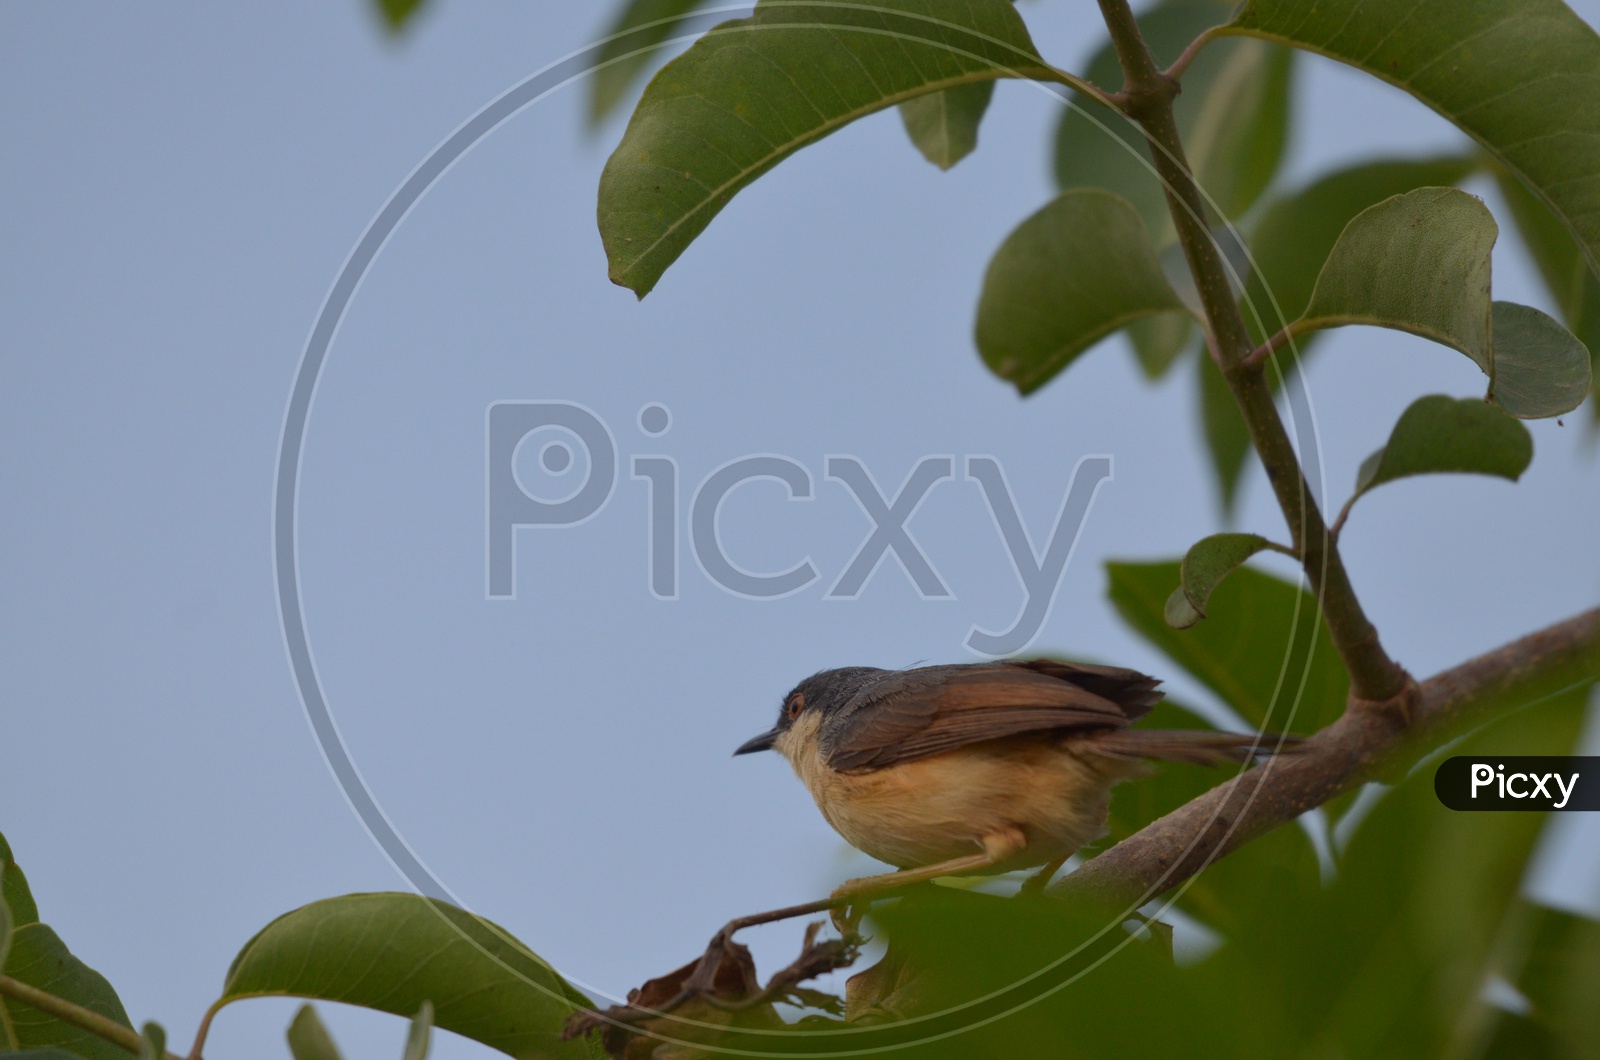 Ashy Prinia / Ashy Wren - Warbler / Bird